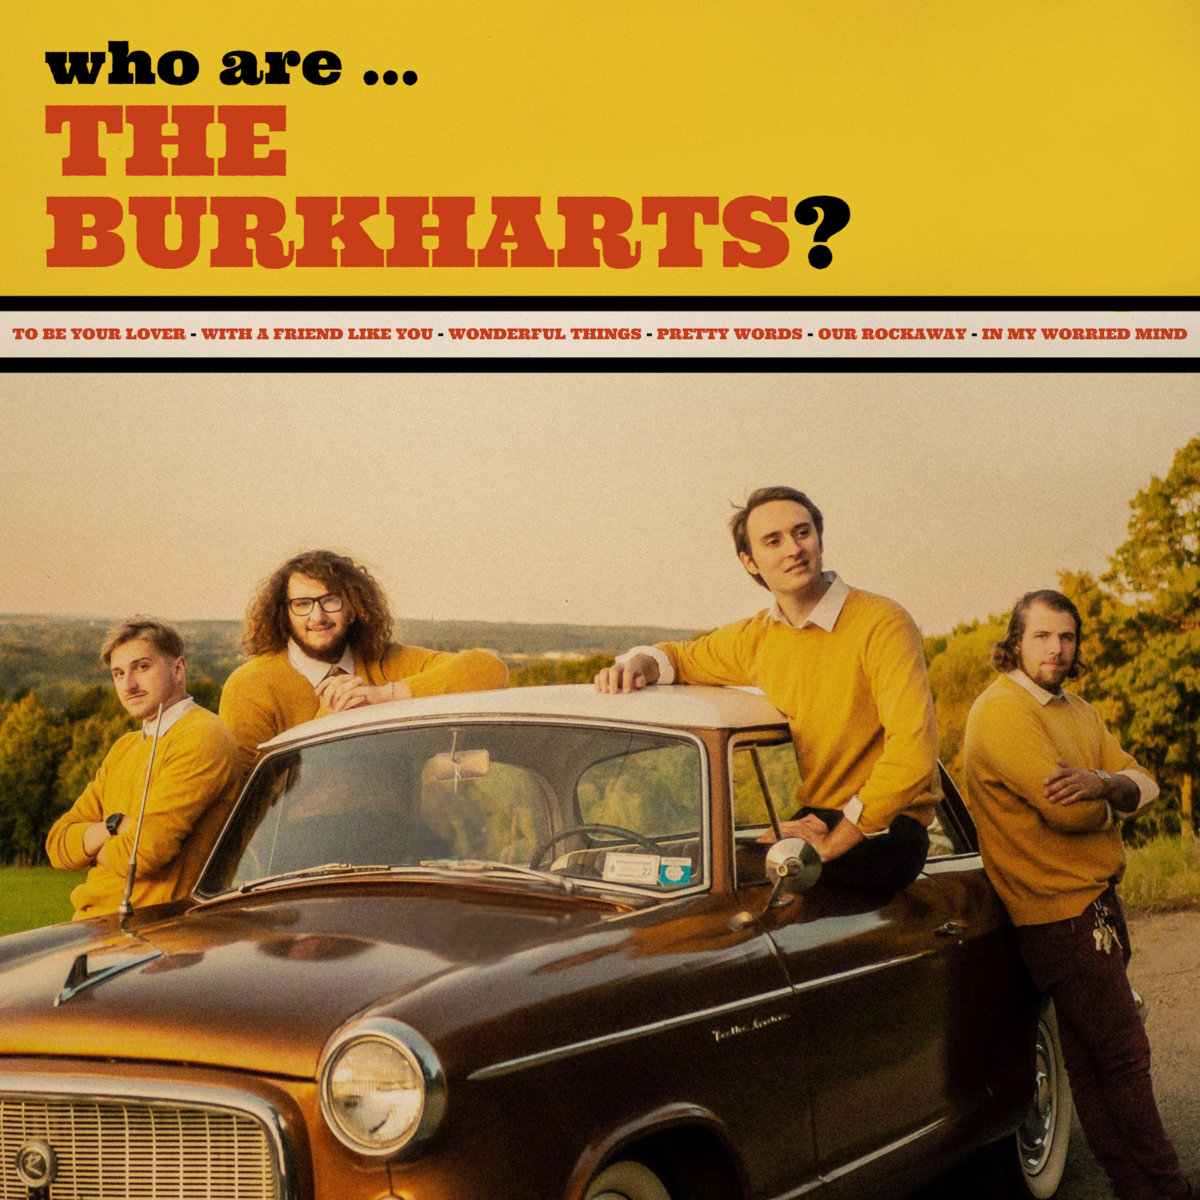 Who are the burkharts?